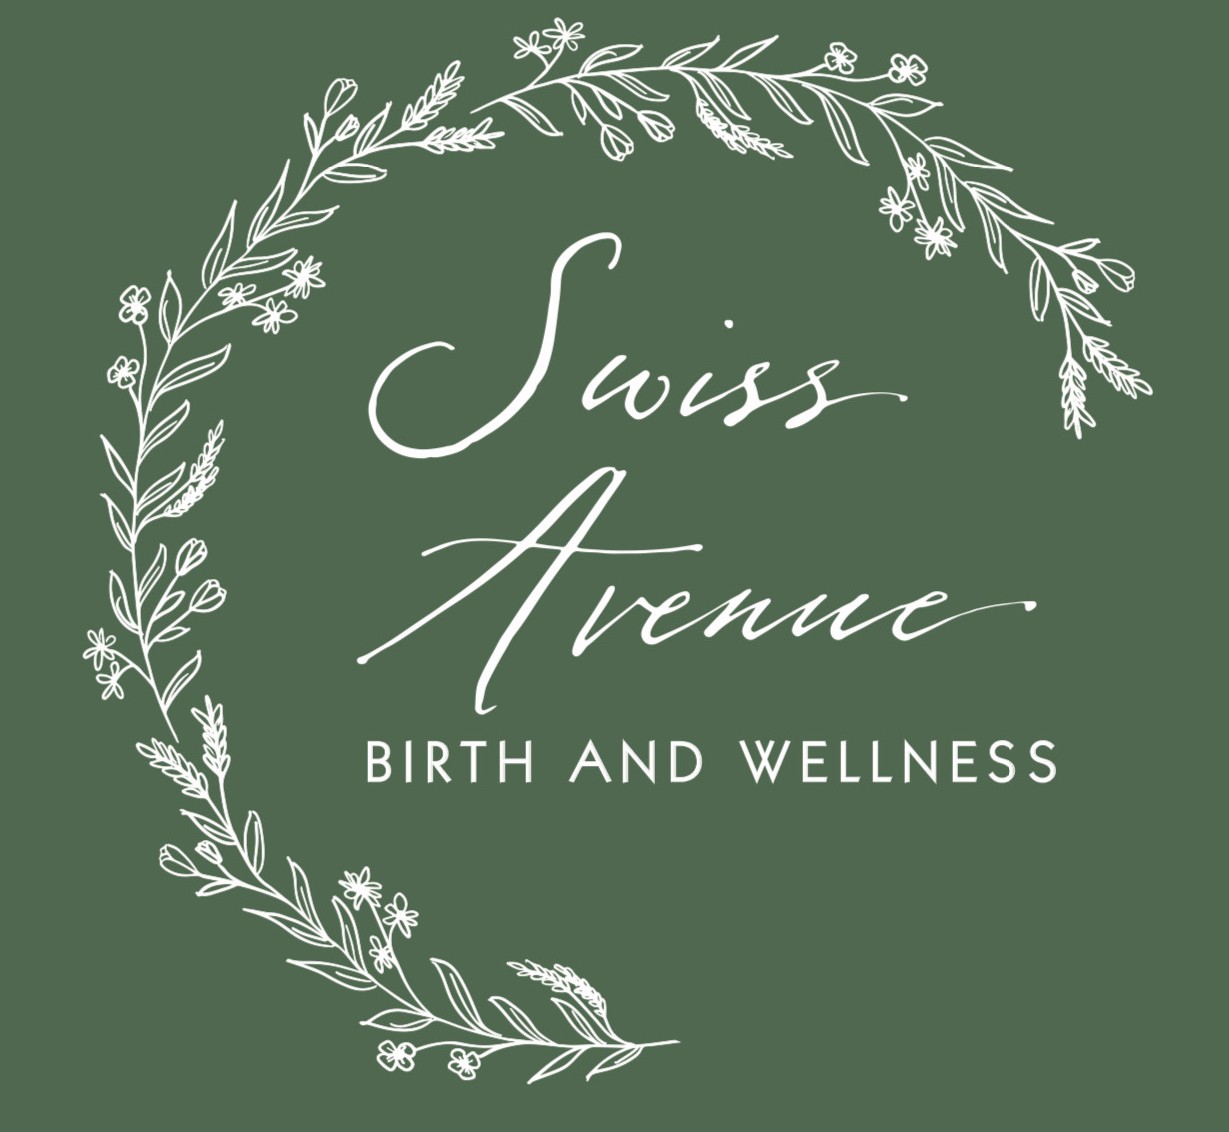 Swiss Avenue Birth and Wellness